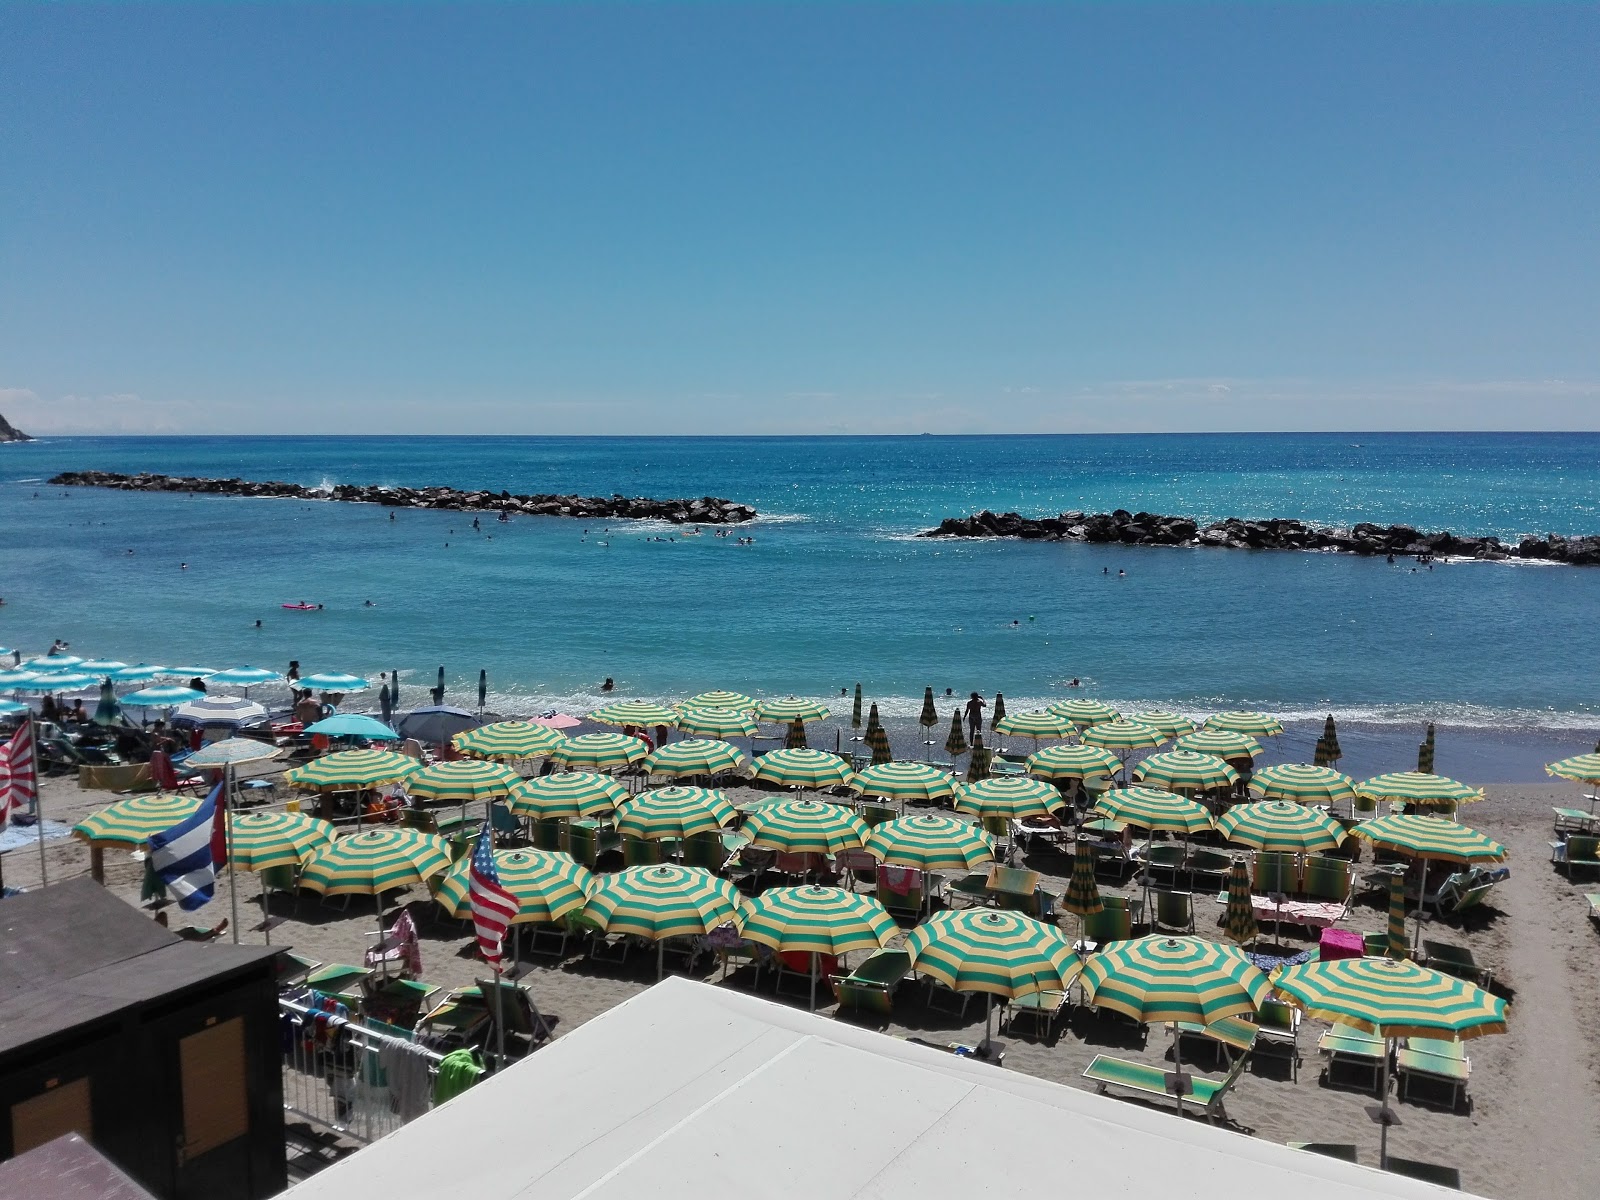 Spiaggia Moneglia'in fotoğrafı uçurumlarla desteklenmiş